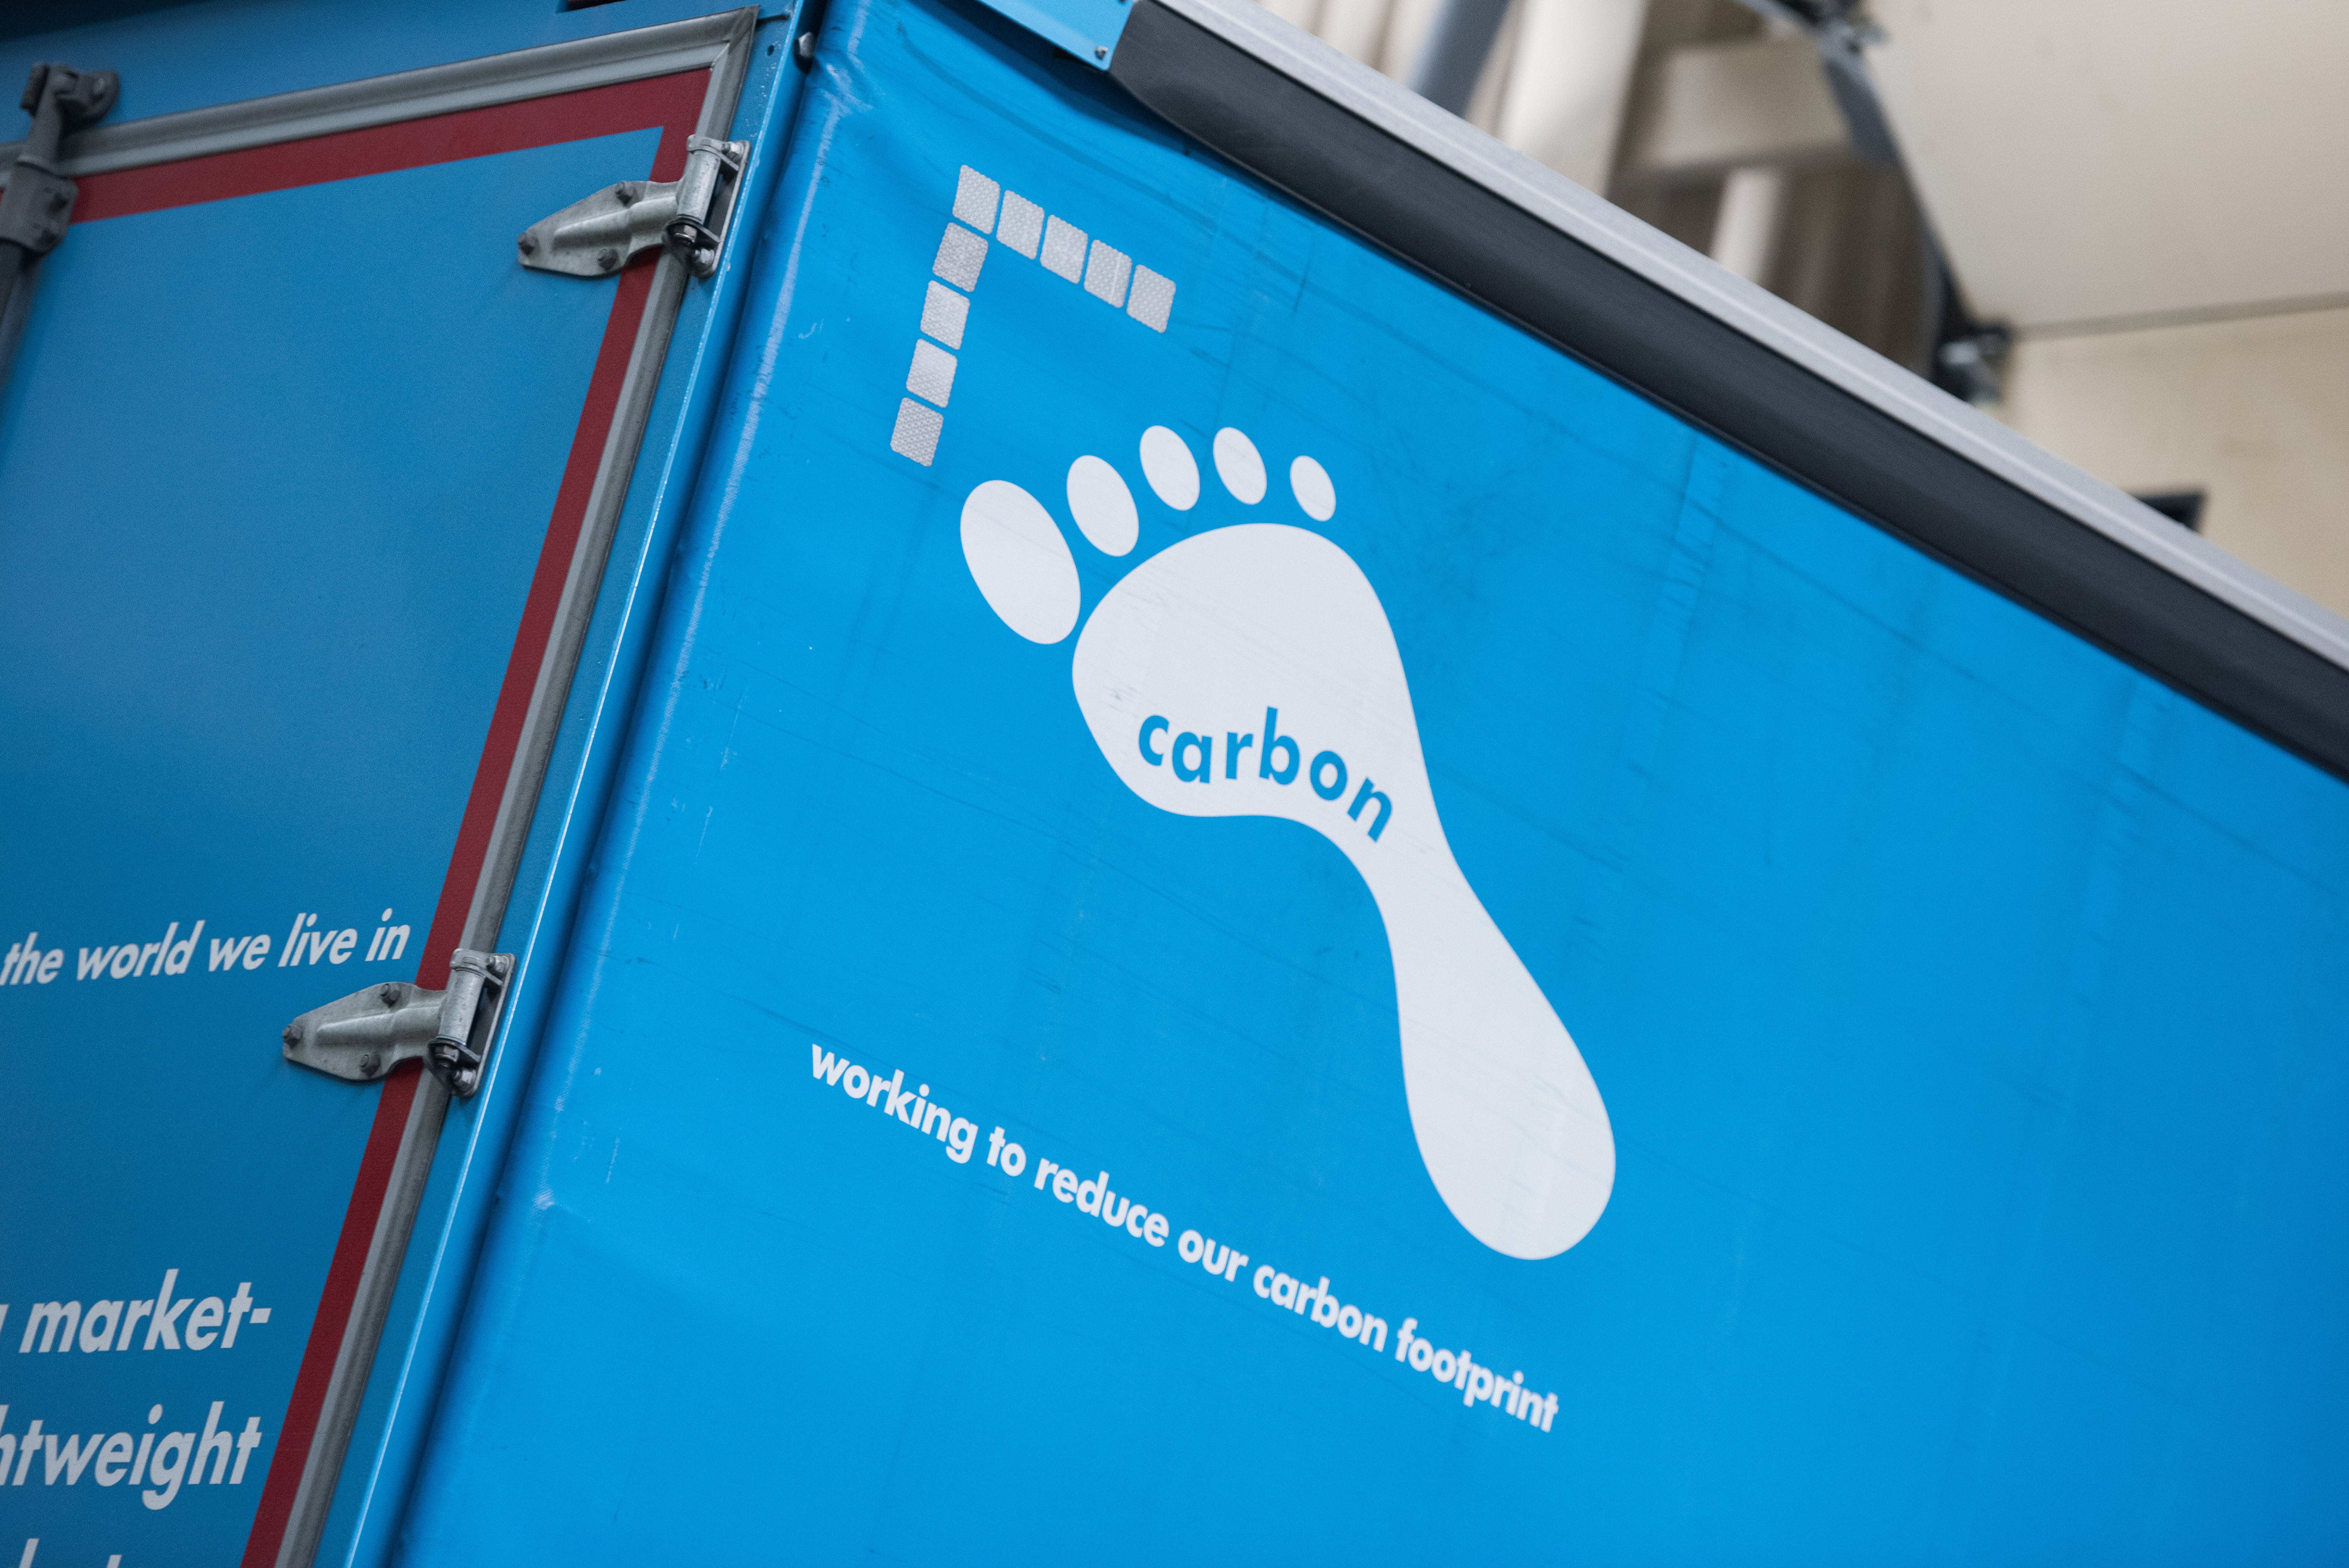 Carbon Footprint logo on Knauf van